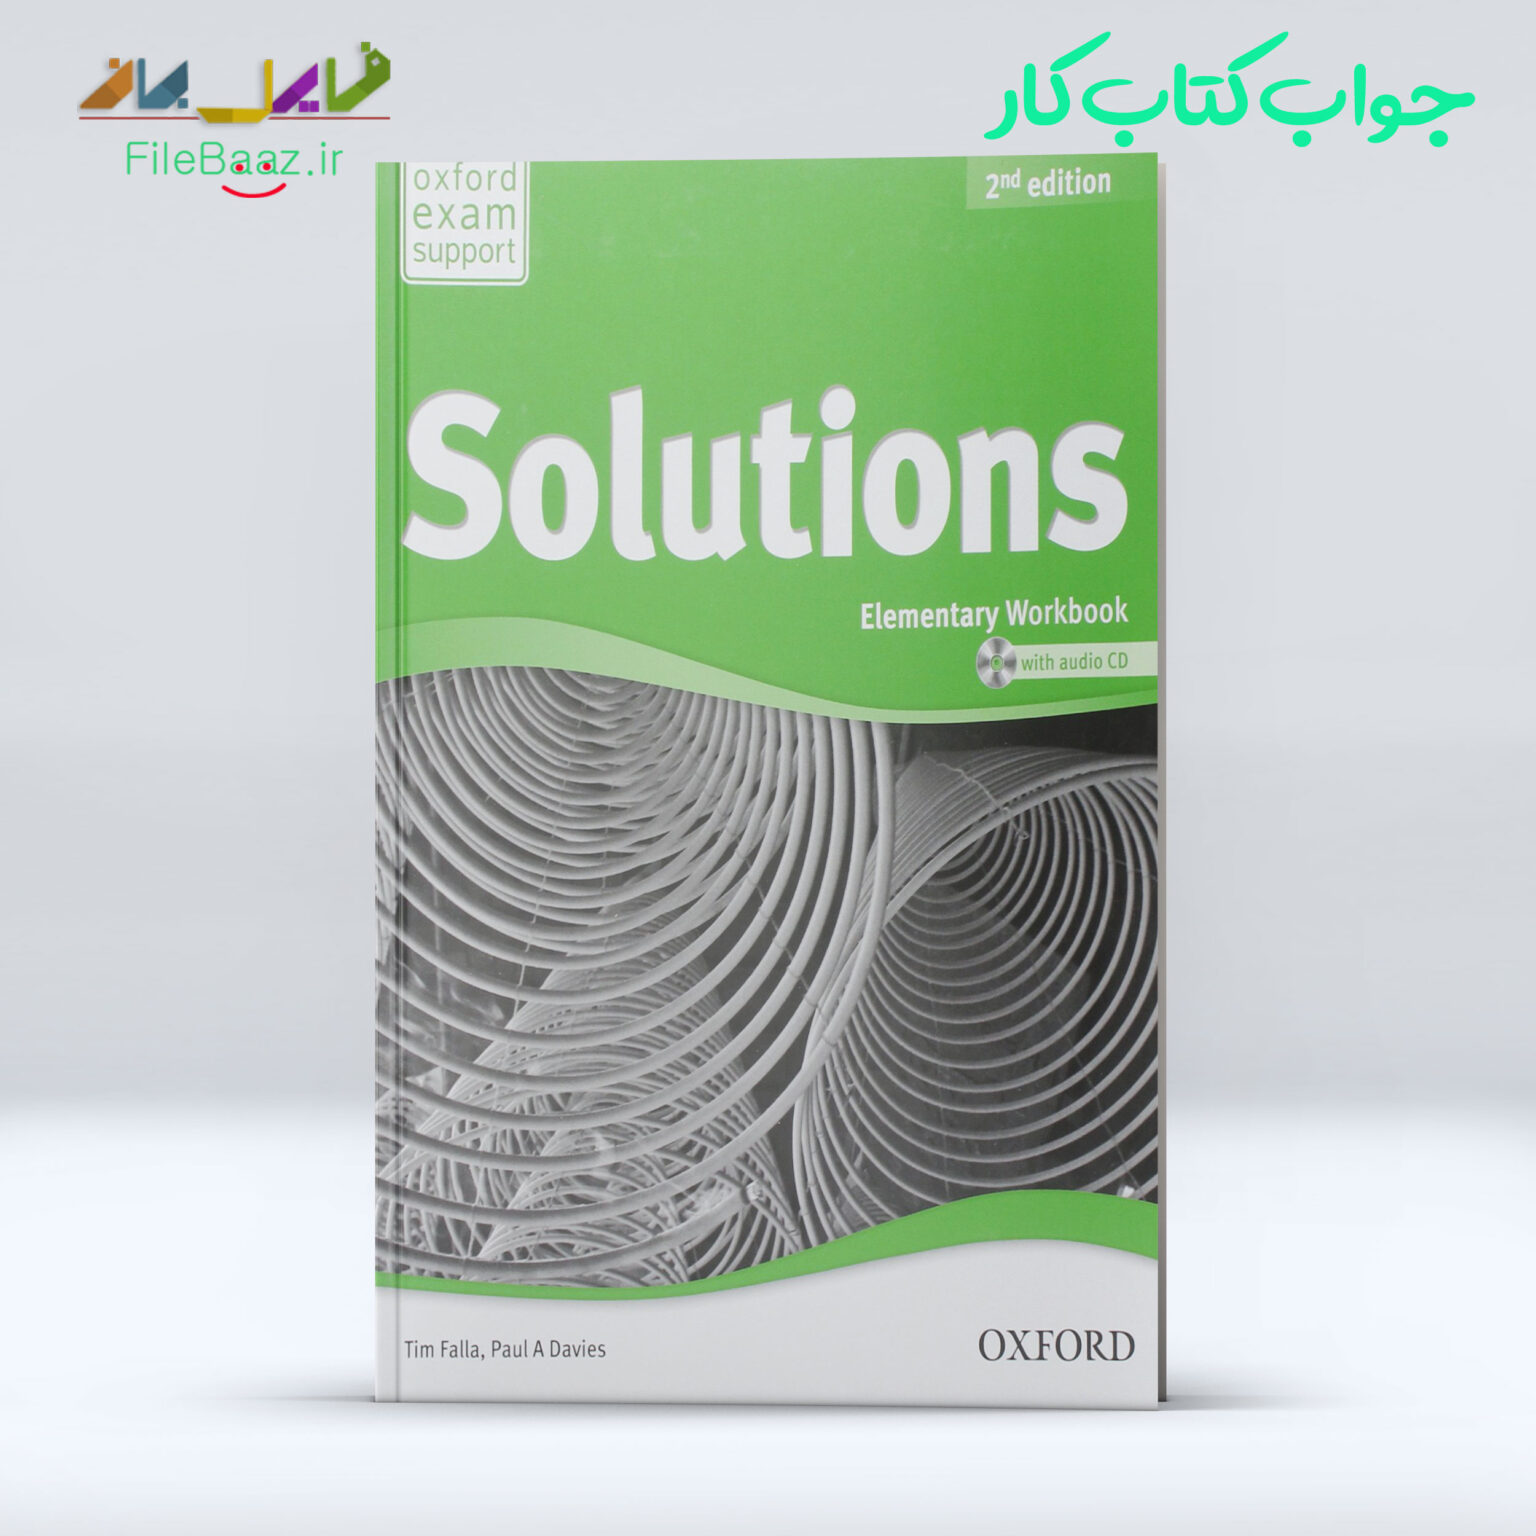 Solutions elementary workbook 5 класс. Third Edition solutions Elementary Workbook. Solutions Elementary Workbook third Edition р 34 гдз.